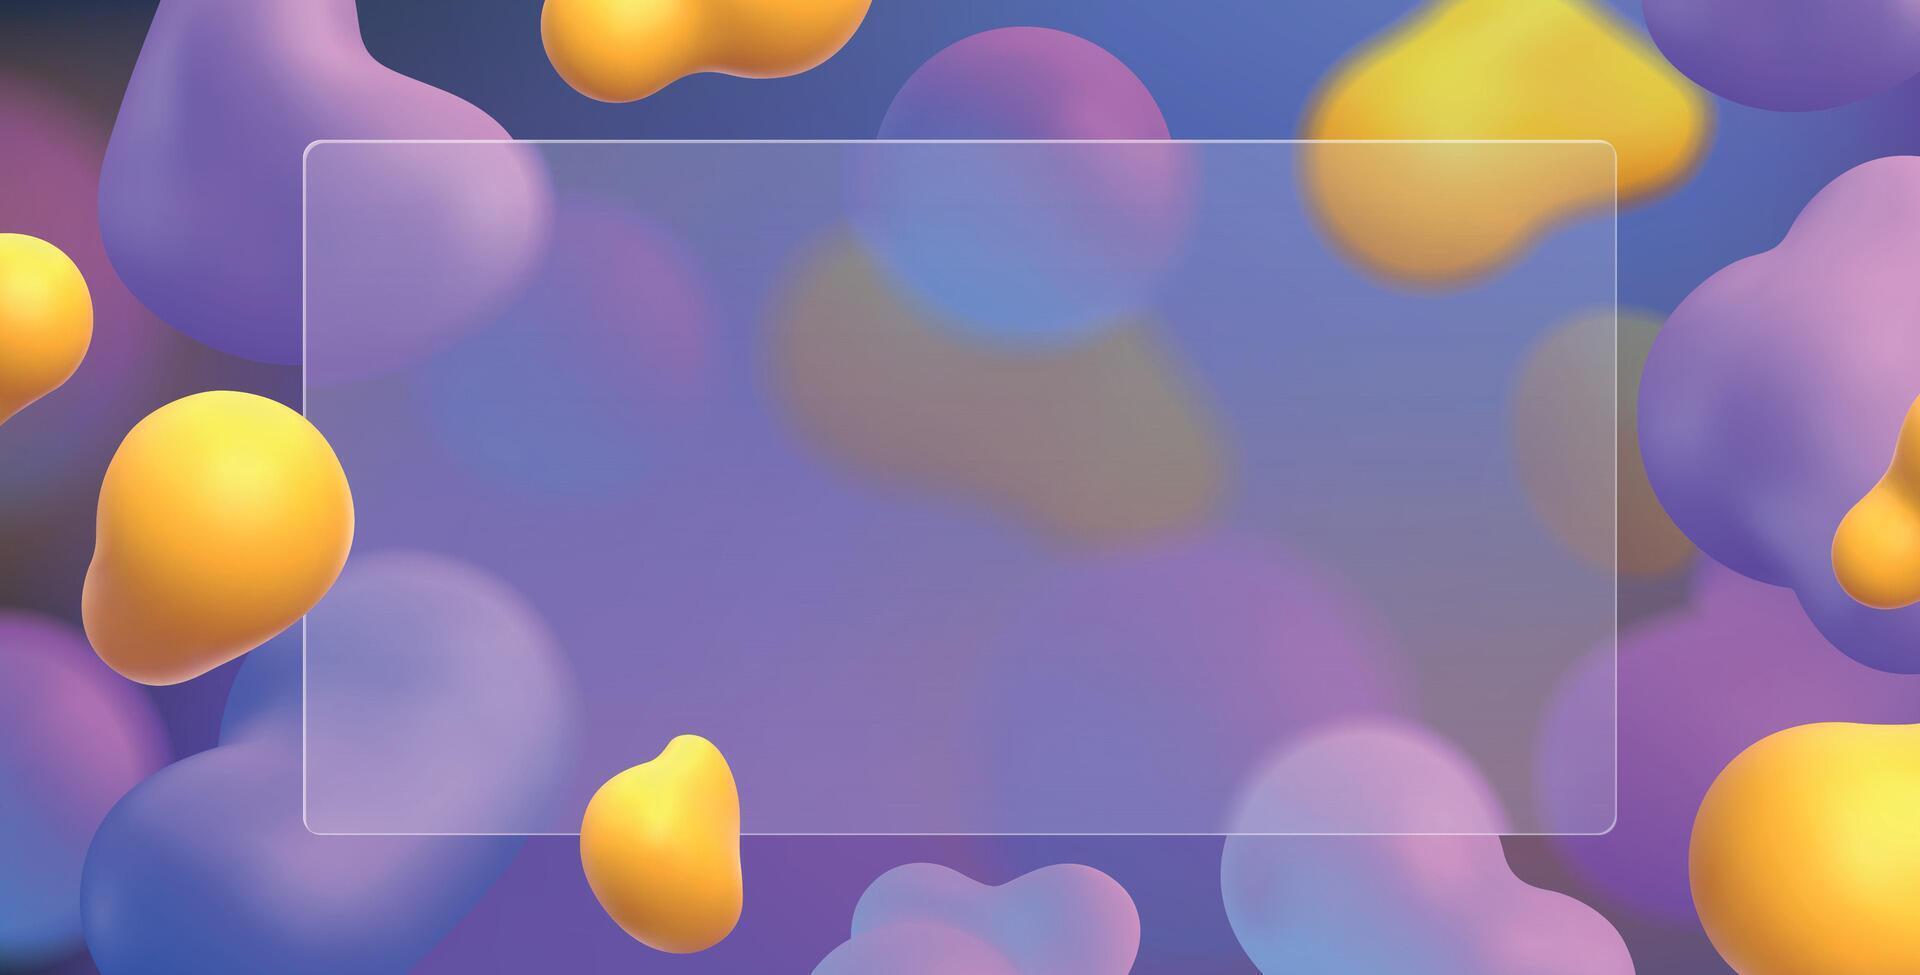 3d glasmorfisme achtergrond sjabloon met vervagen vloeistof kleurrijk klodders. transparant glas morfisme banier met abstract vormen vector ontwerp